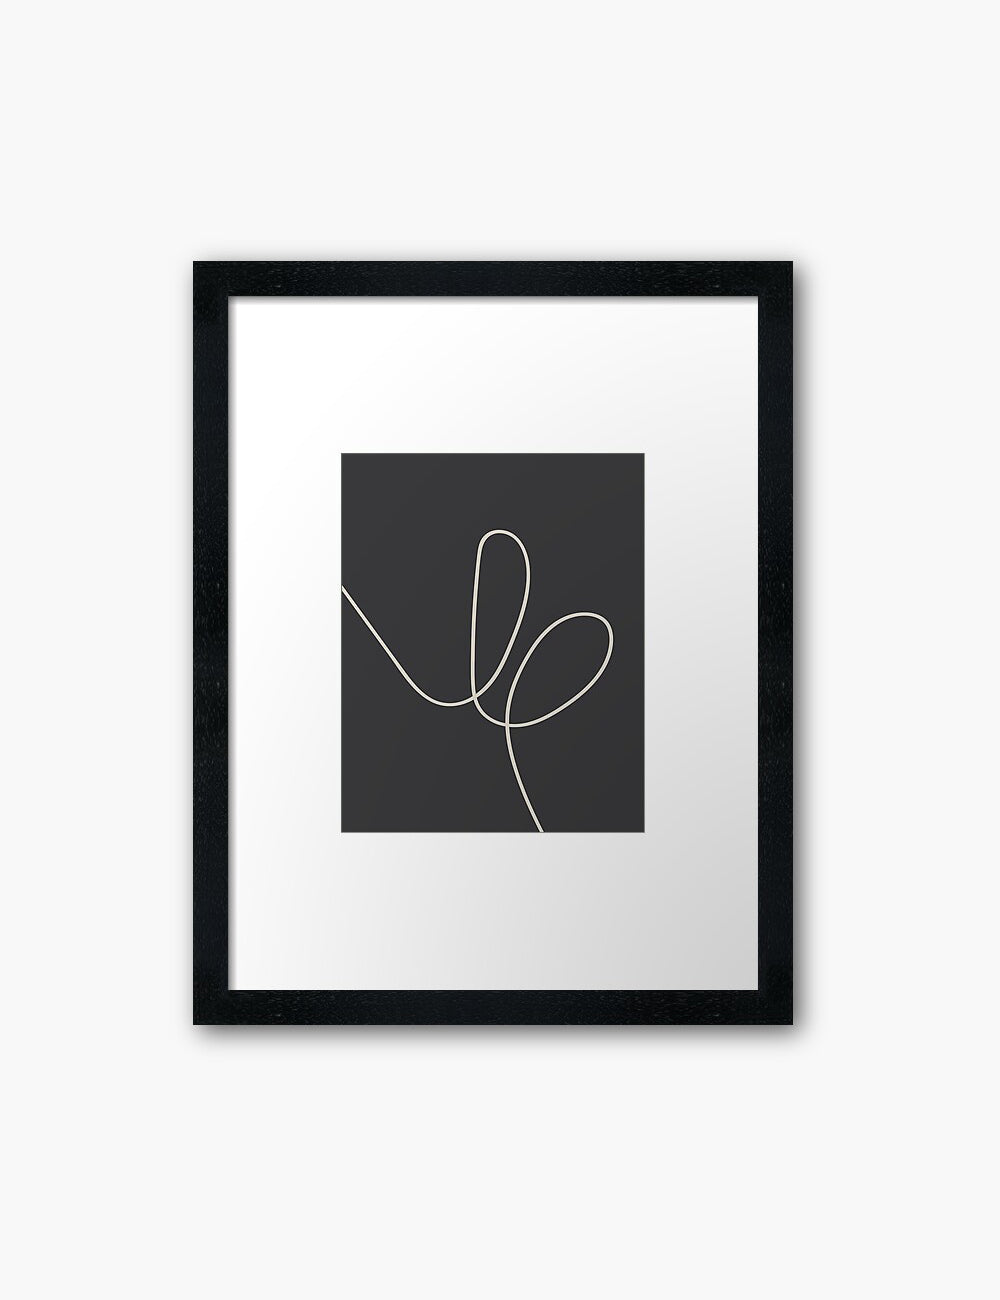 MINIMAL LINE ART. Abstract Heart Shape. Boho Aesthetic. Black and White. Dark Grey. Beige. Printable Wall Art Illustration. - PAPER MOON Art & Design